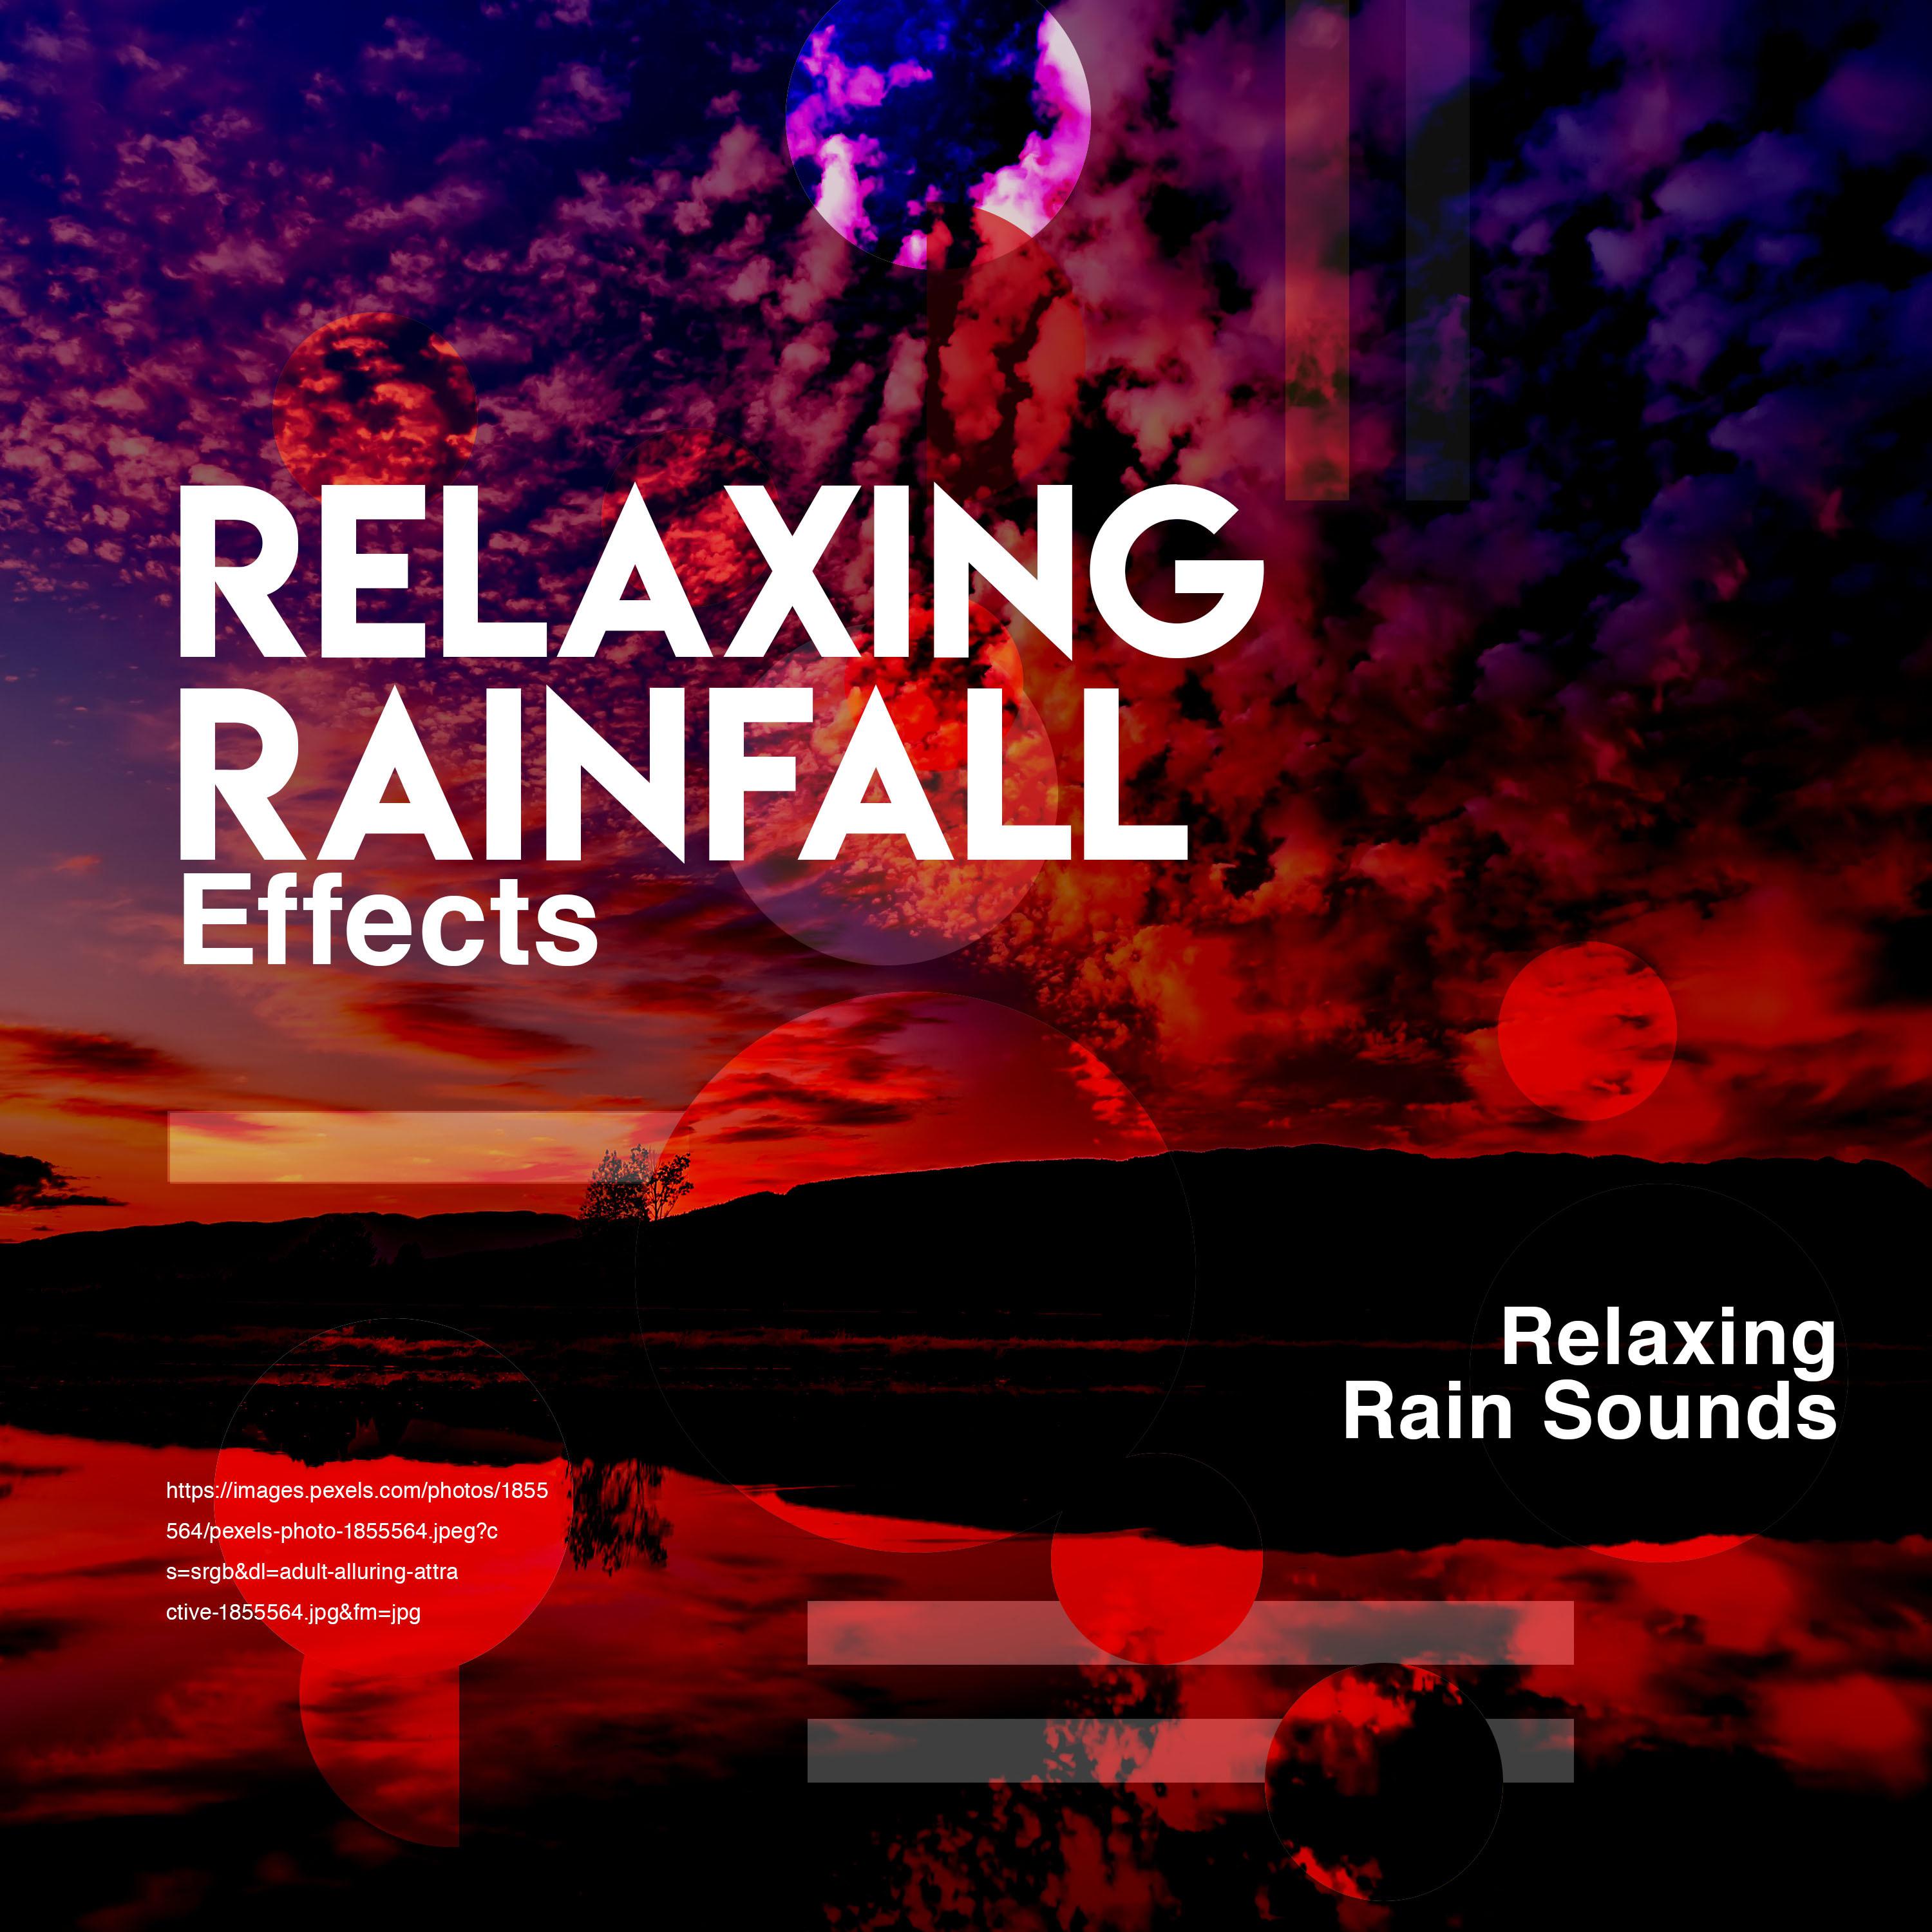 Relaxing Rainfall Effects